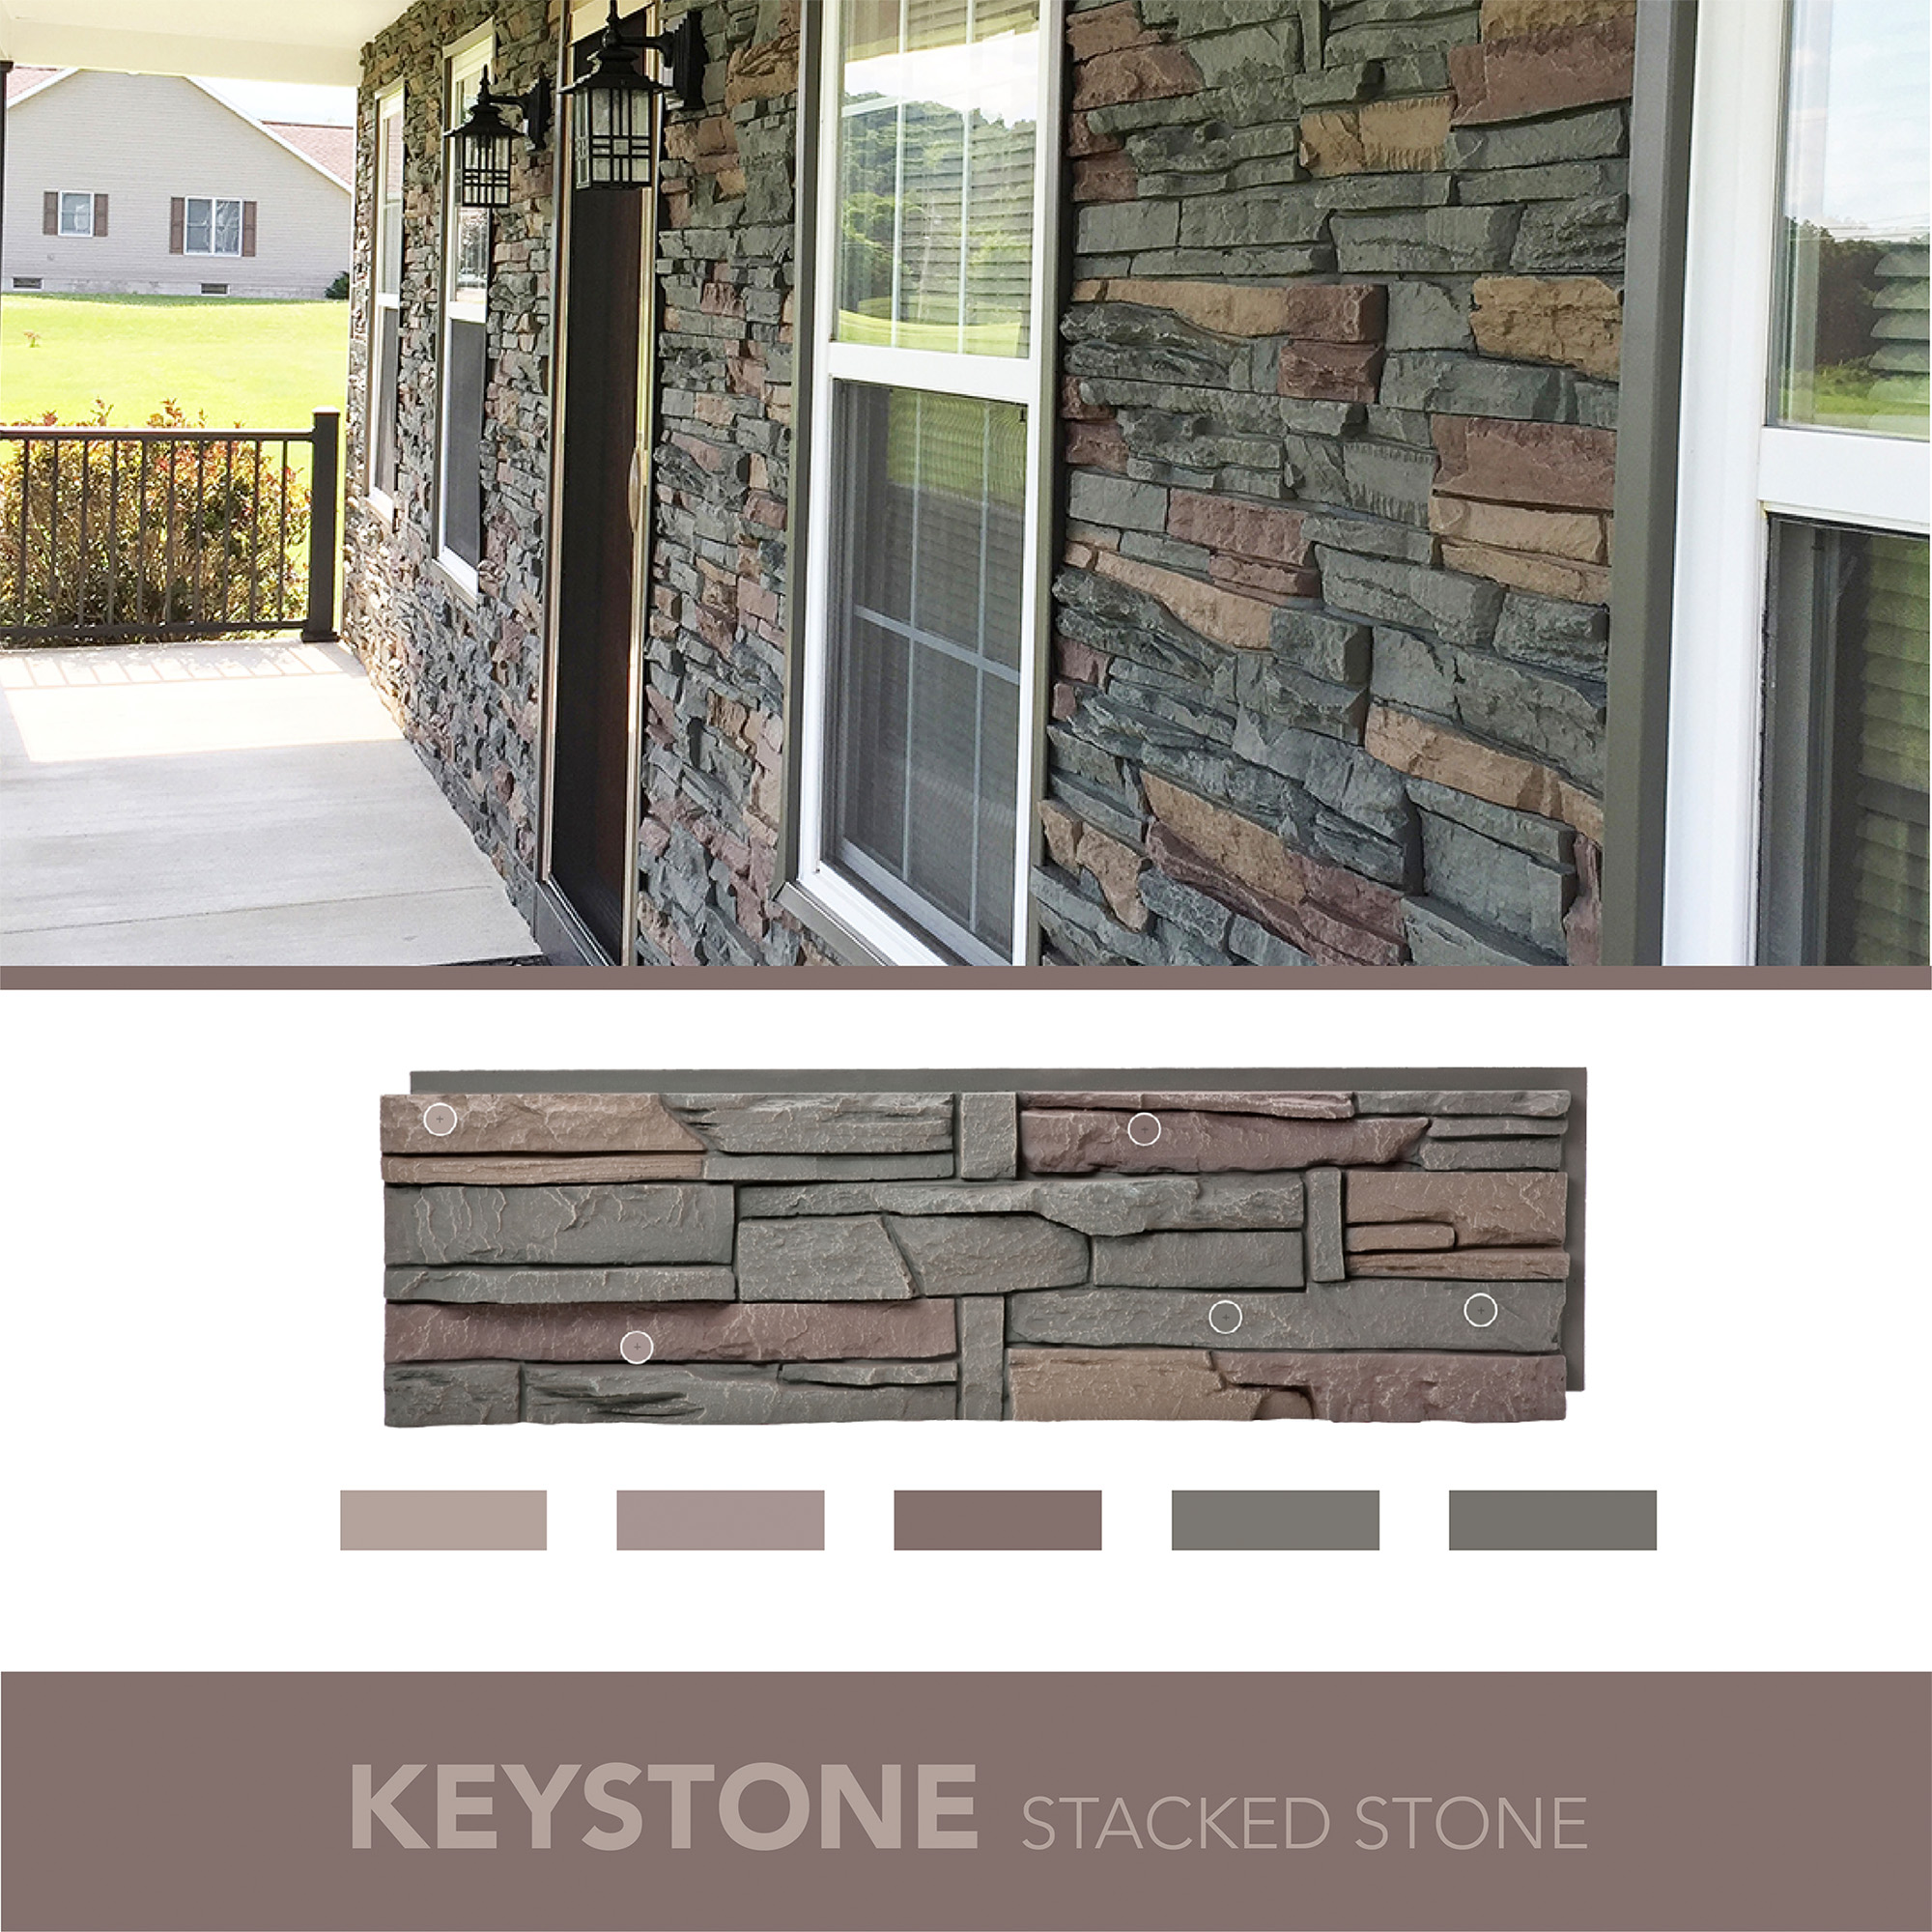 Discover GenStone Keystone Stacked Stone